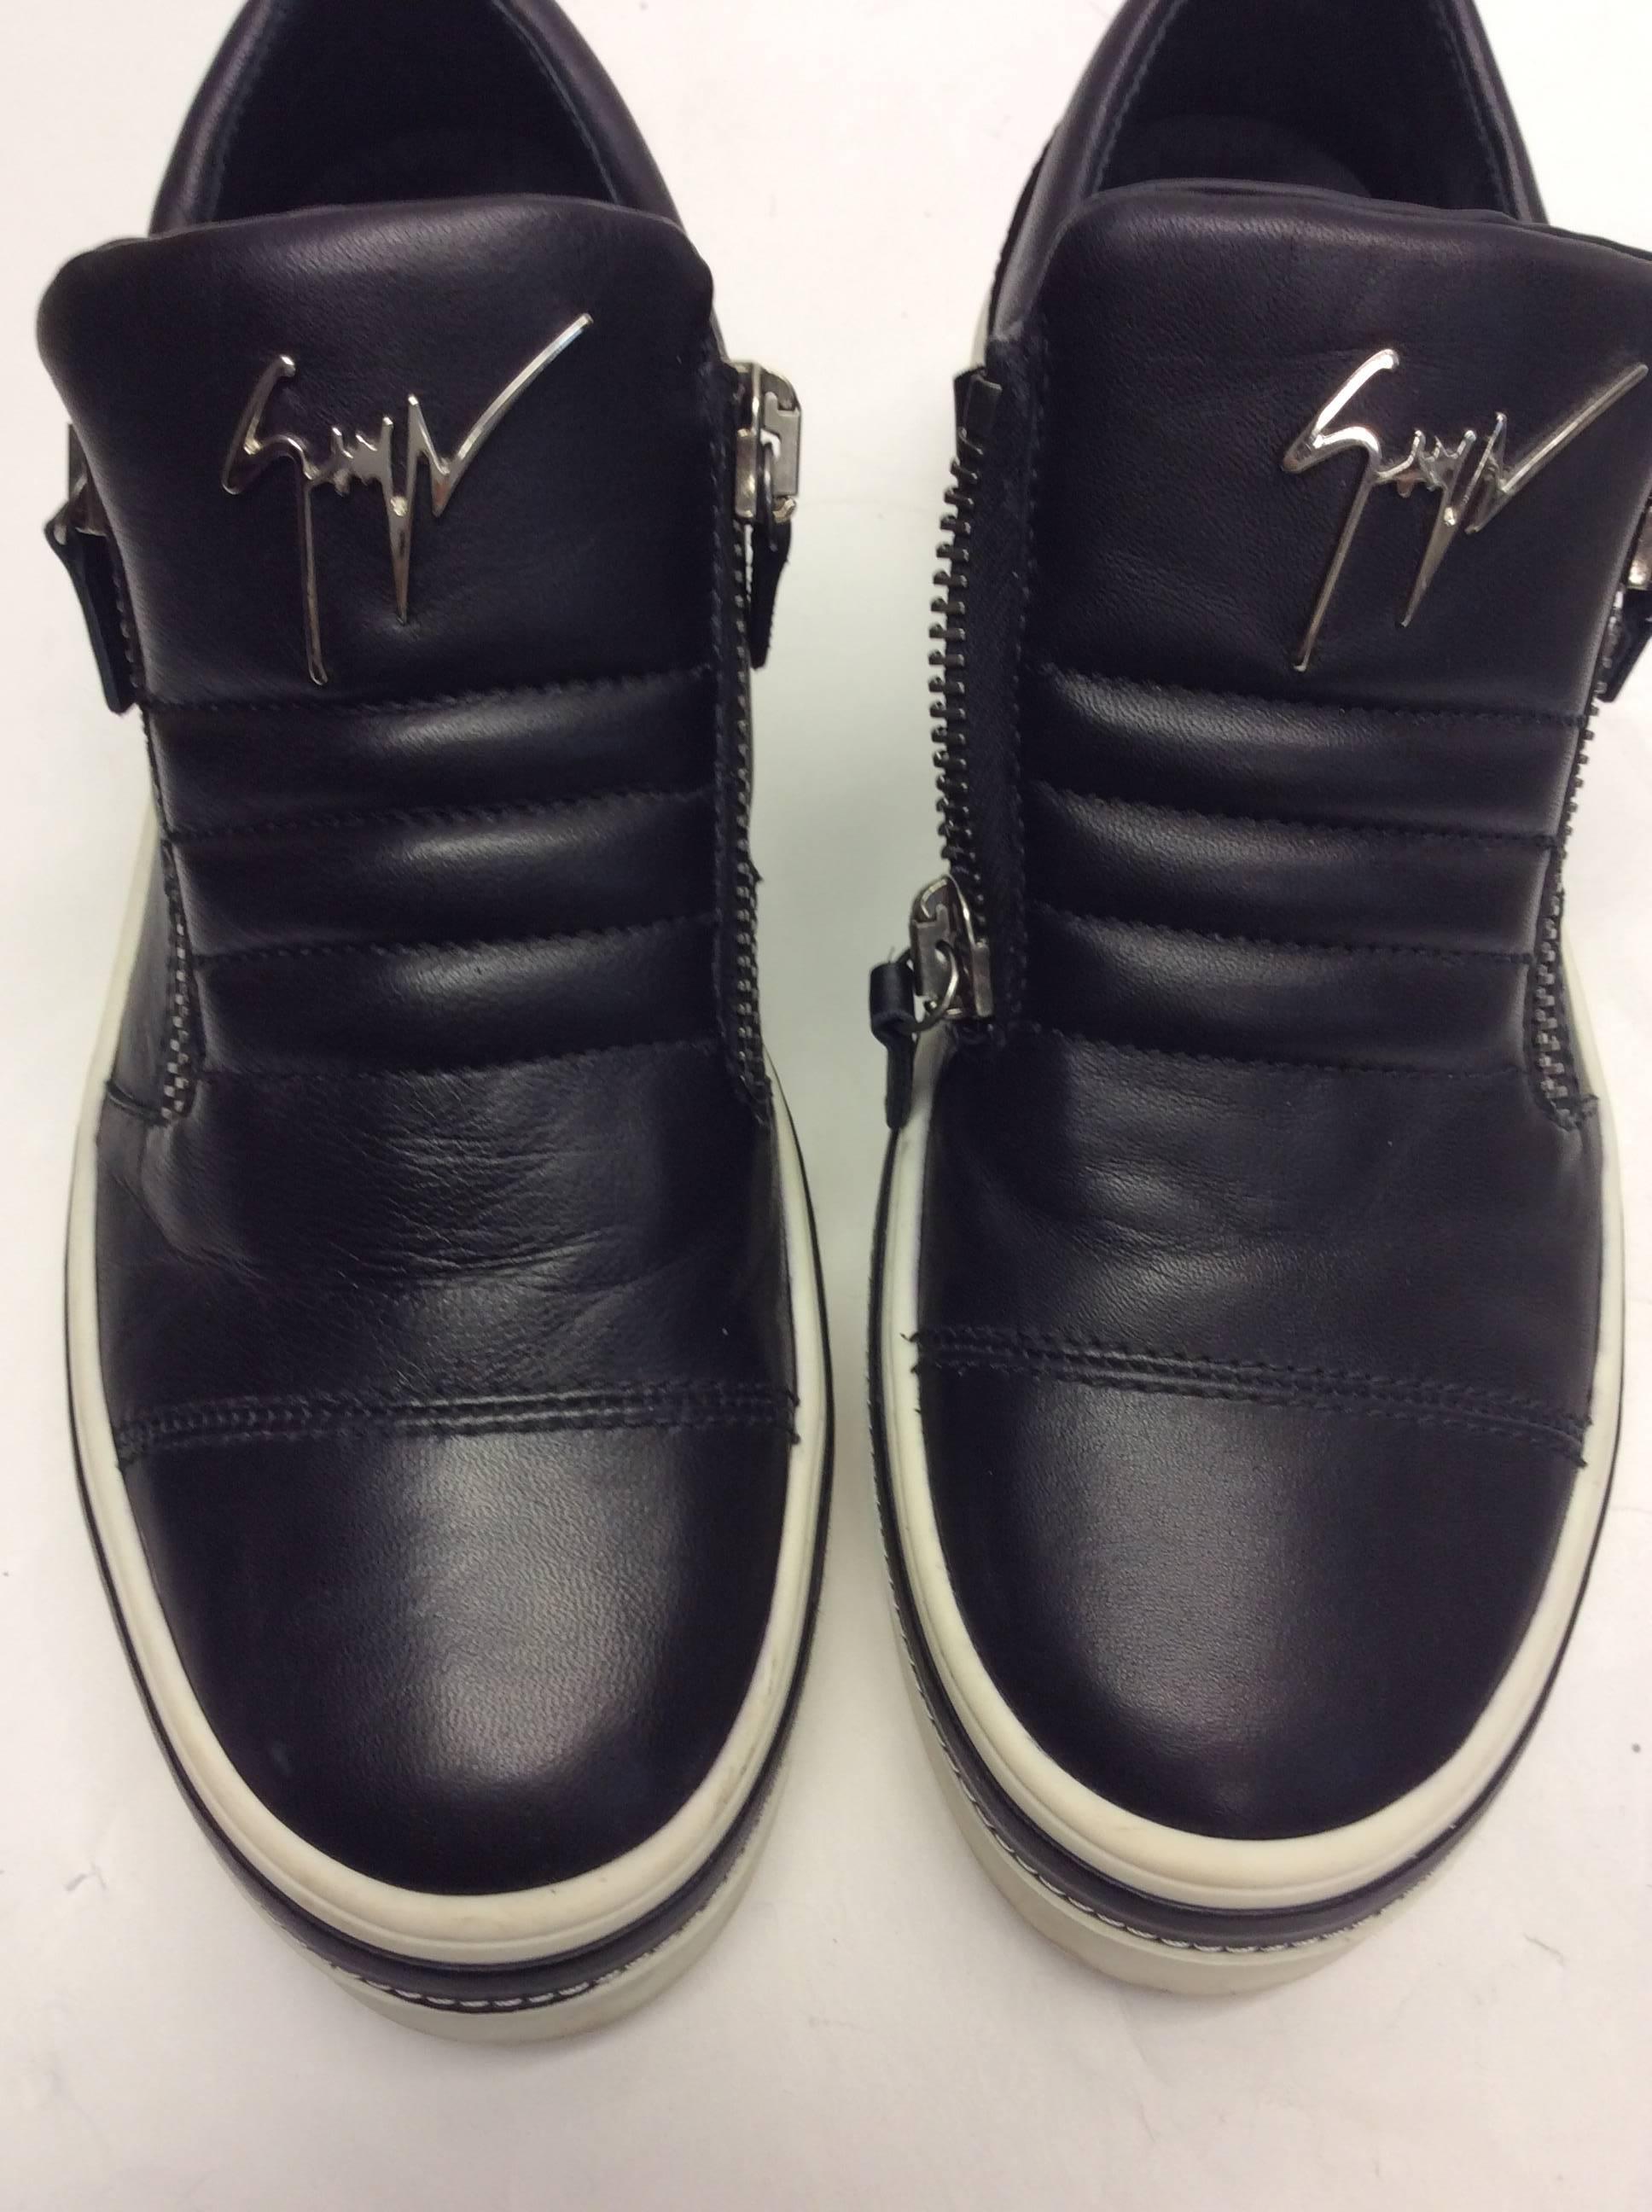 Guiseppe Zanotti Black Leather Slip On Sneaker
$350
Size 39
Silver hardware
Zipper detailing
